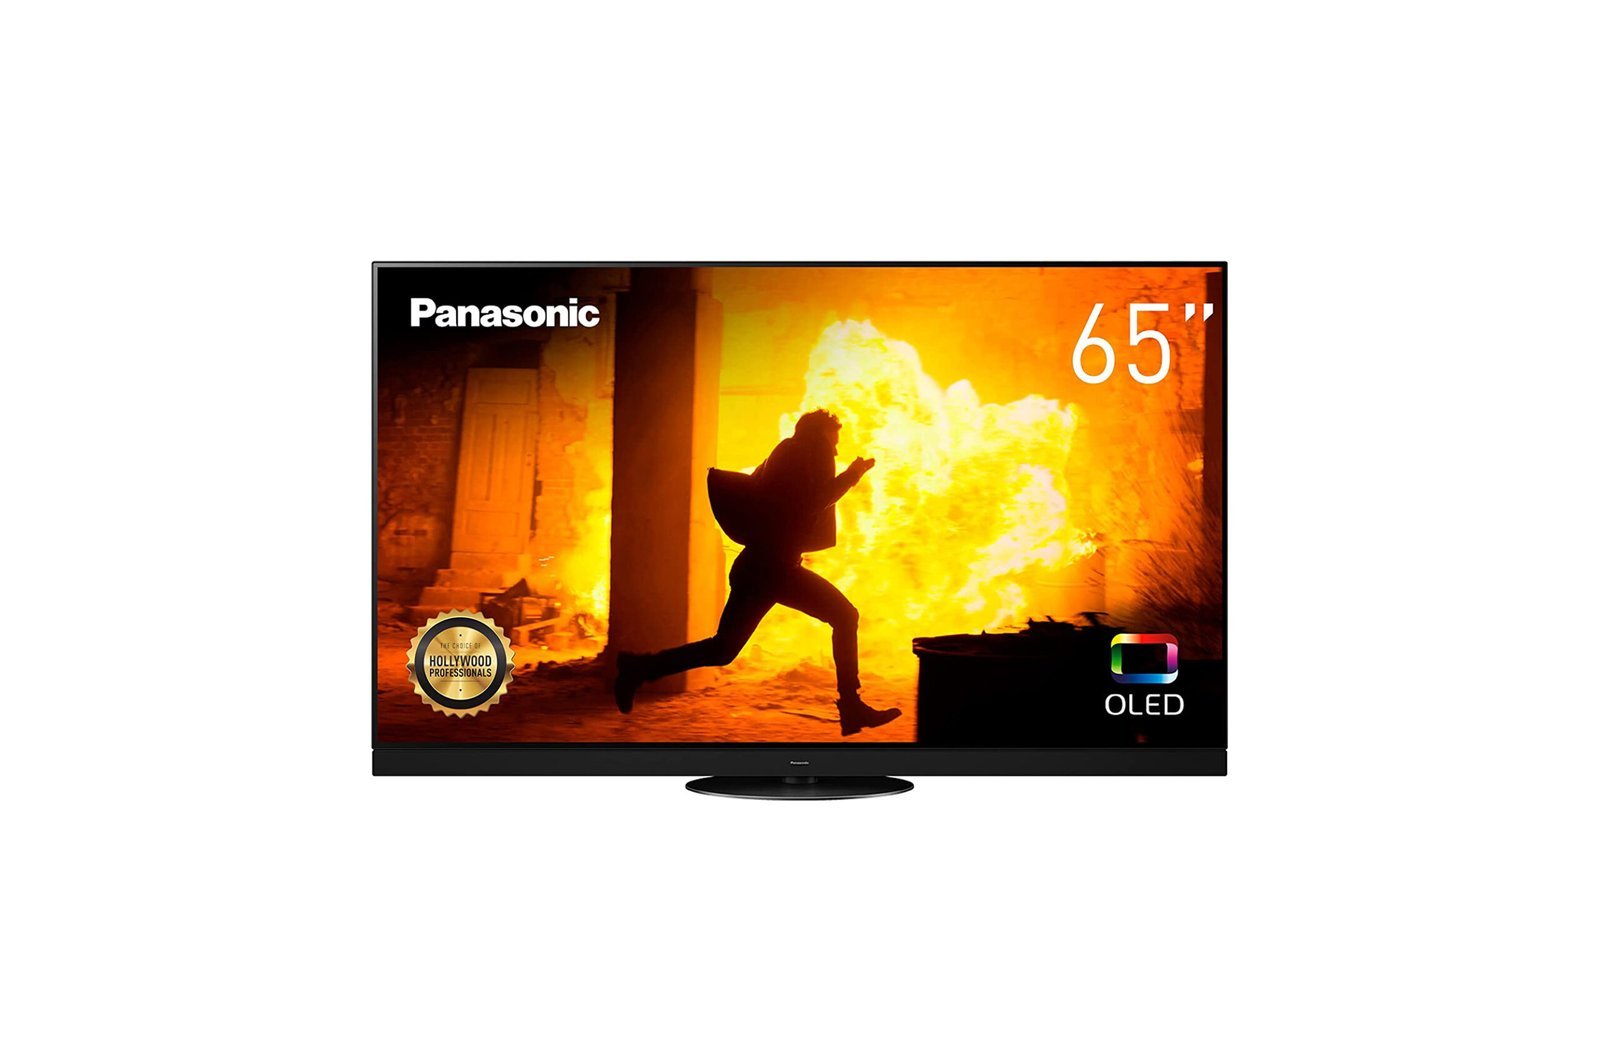 Panasonic 65 Inch LED TV OLED Color Black  Model-TH-65HZ1500M | 1 Year Warranty